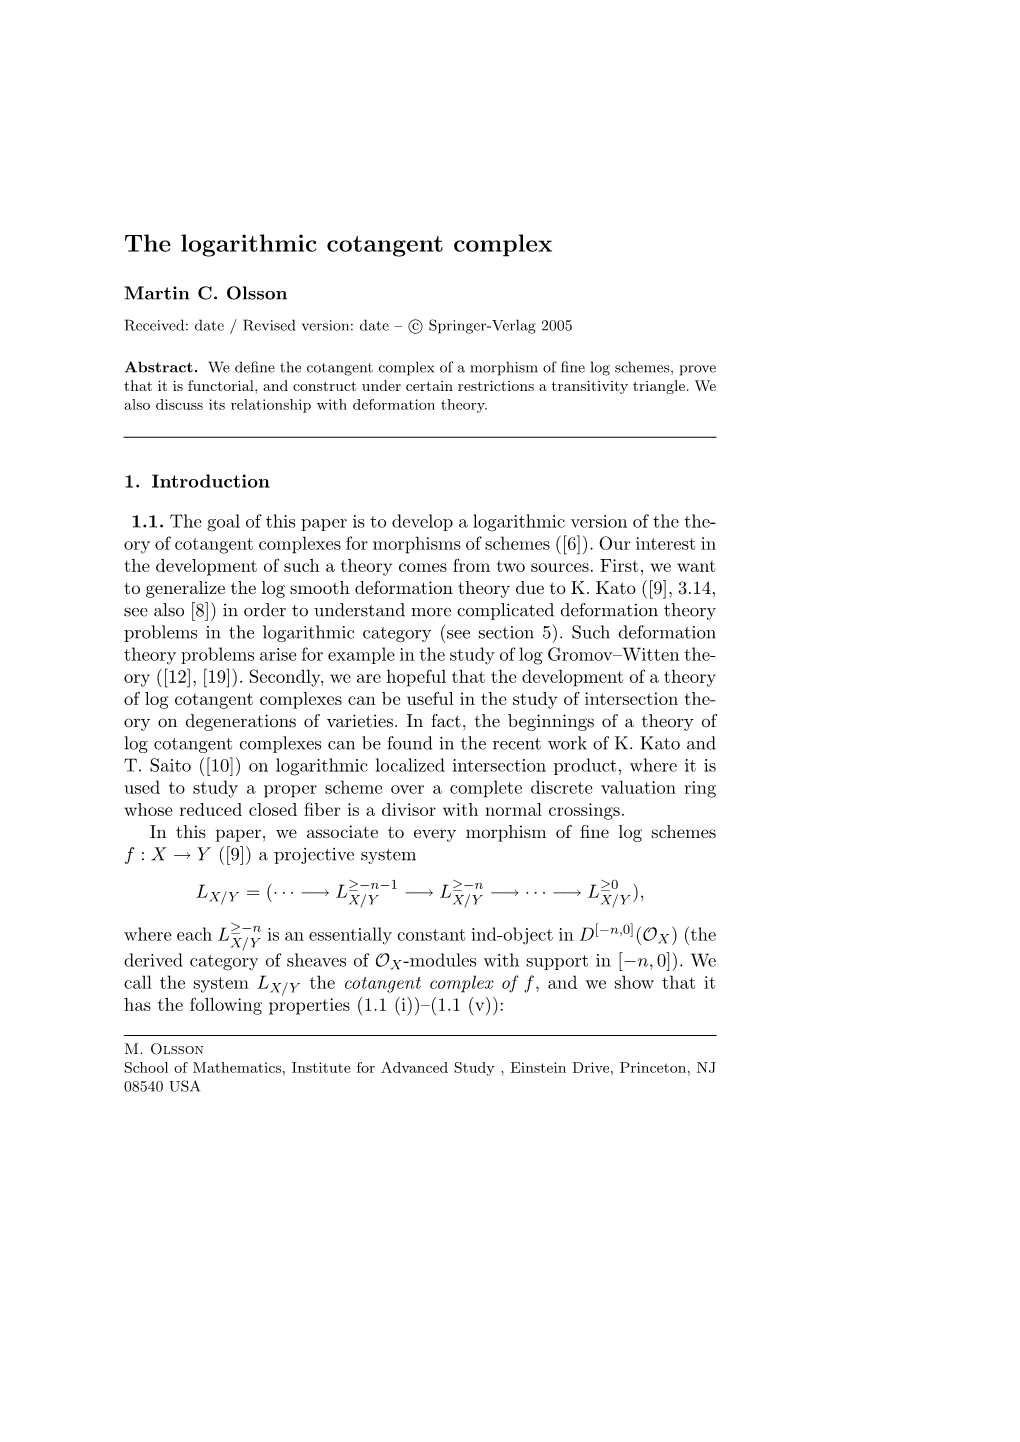 The Logarithmic Cotangent Complex